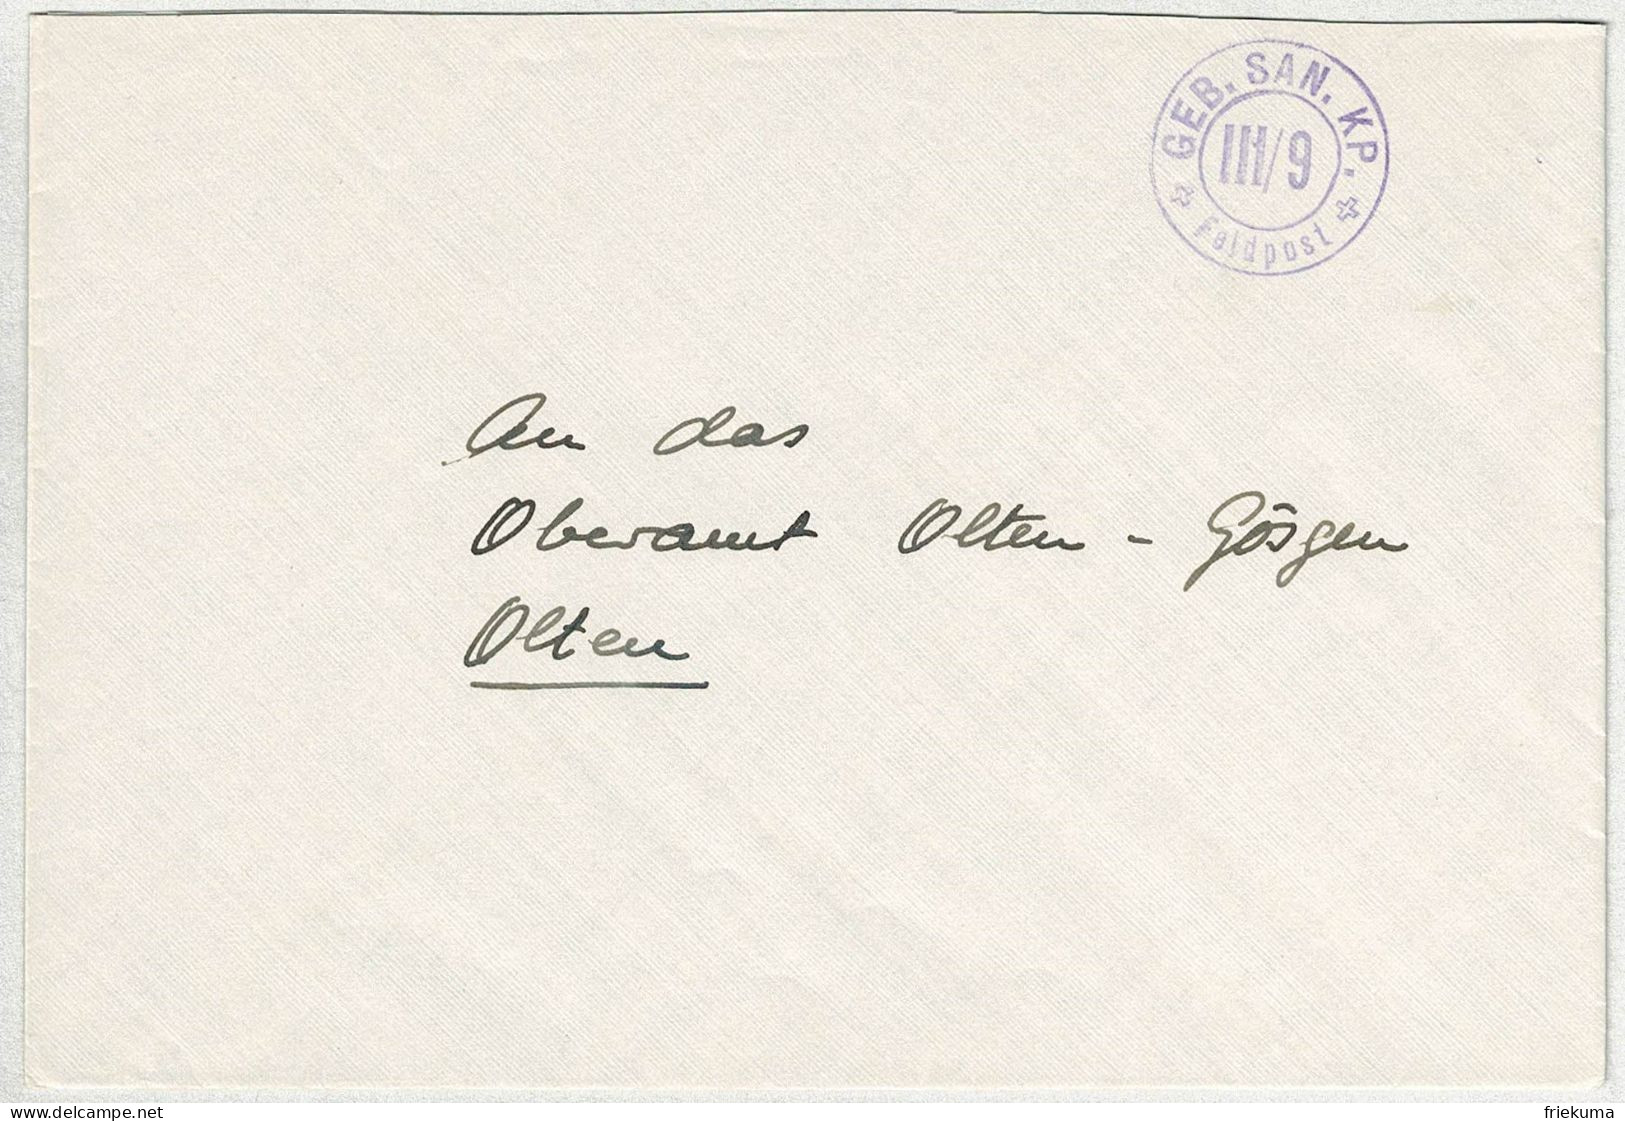 Schweiz, Brief Feldpost Geb.San-KP III/9 - Olten, Courrier Militaire / Field Post - Dokumente